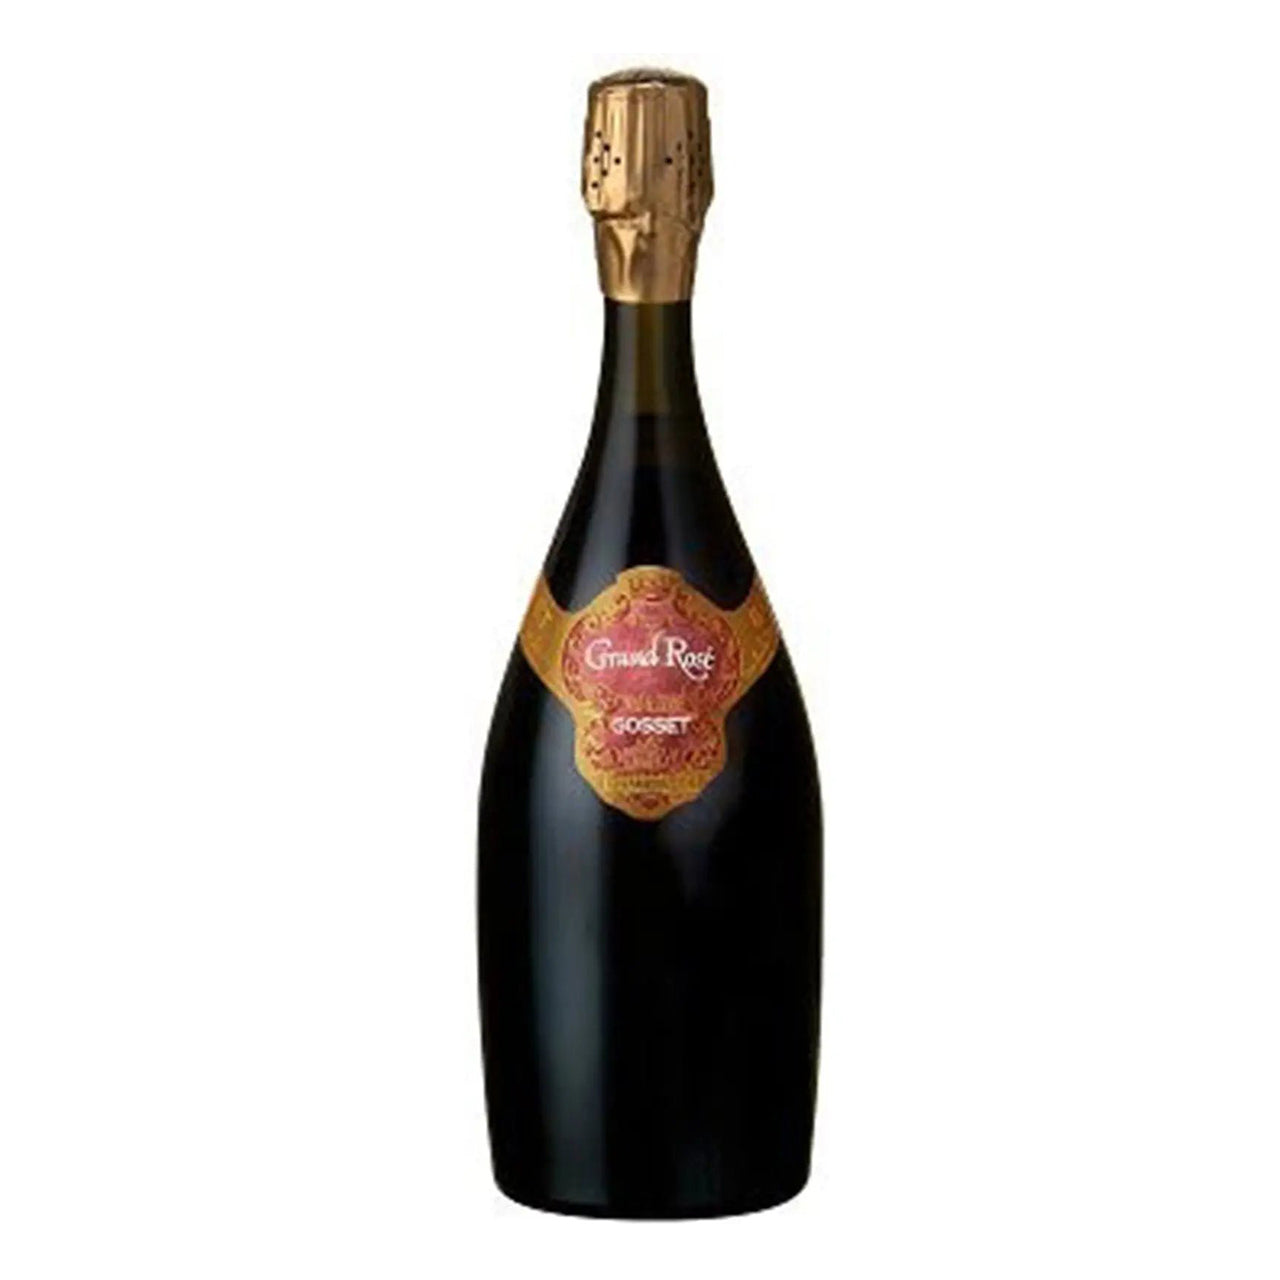 Gosset Champagne NV Grand Rose 750 - Wine France Champagne - Liquor Wine Cave